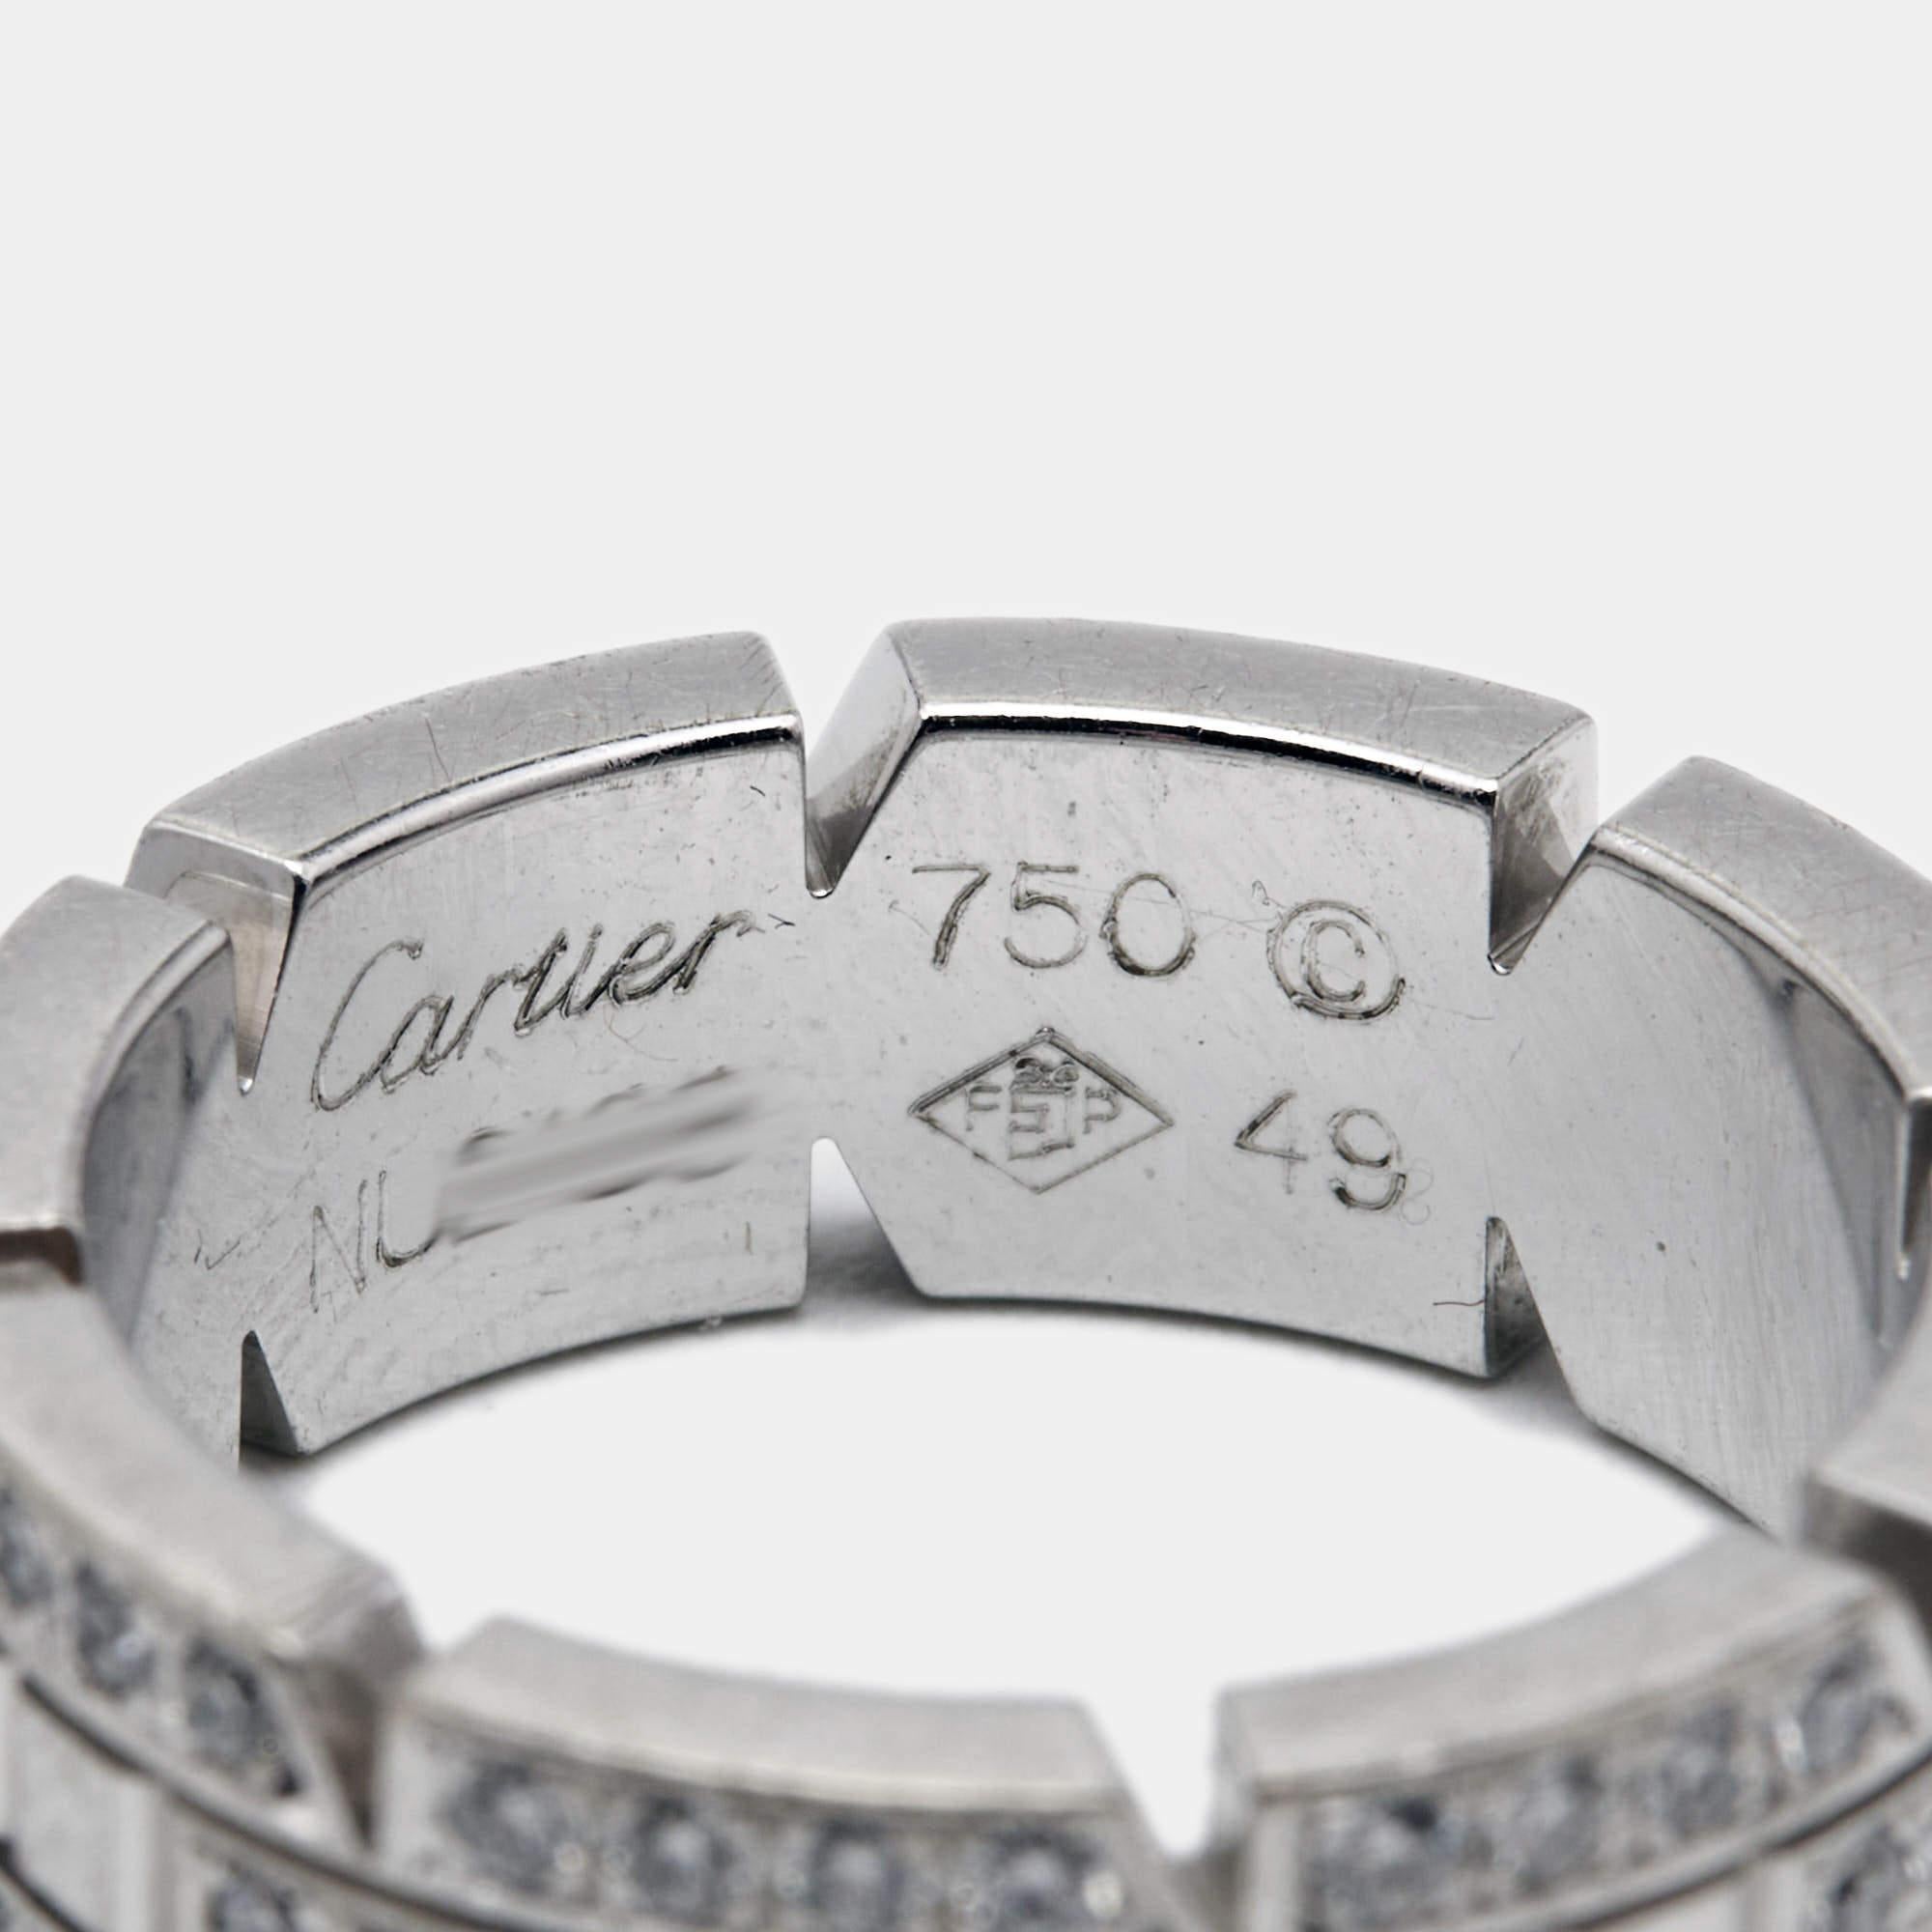 Cartier Mallion Panthere Diamonds 18k White Gold Ring Size 49 2